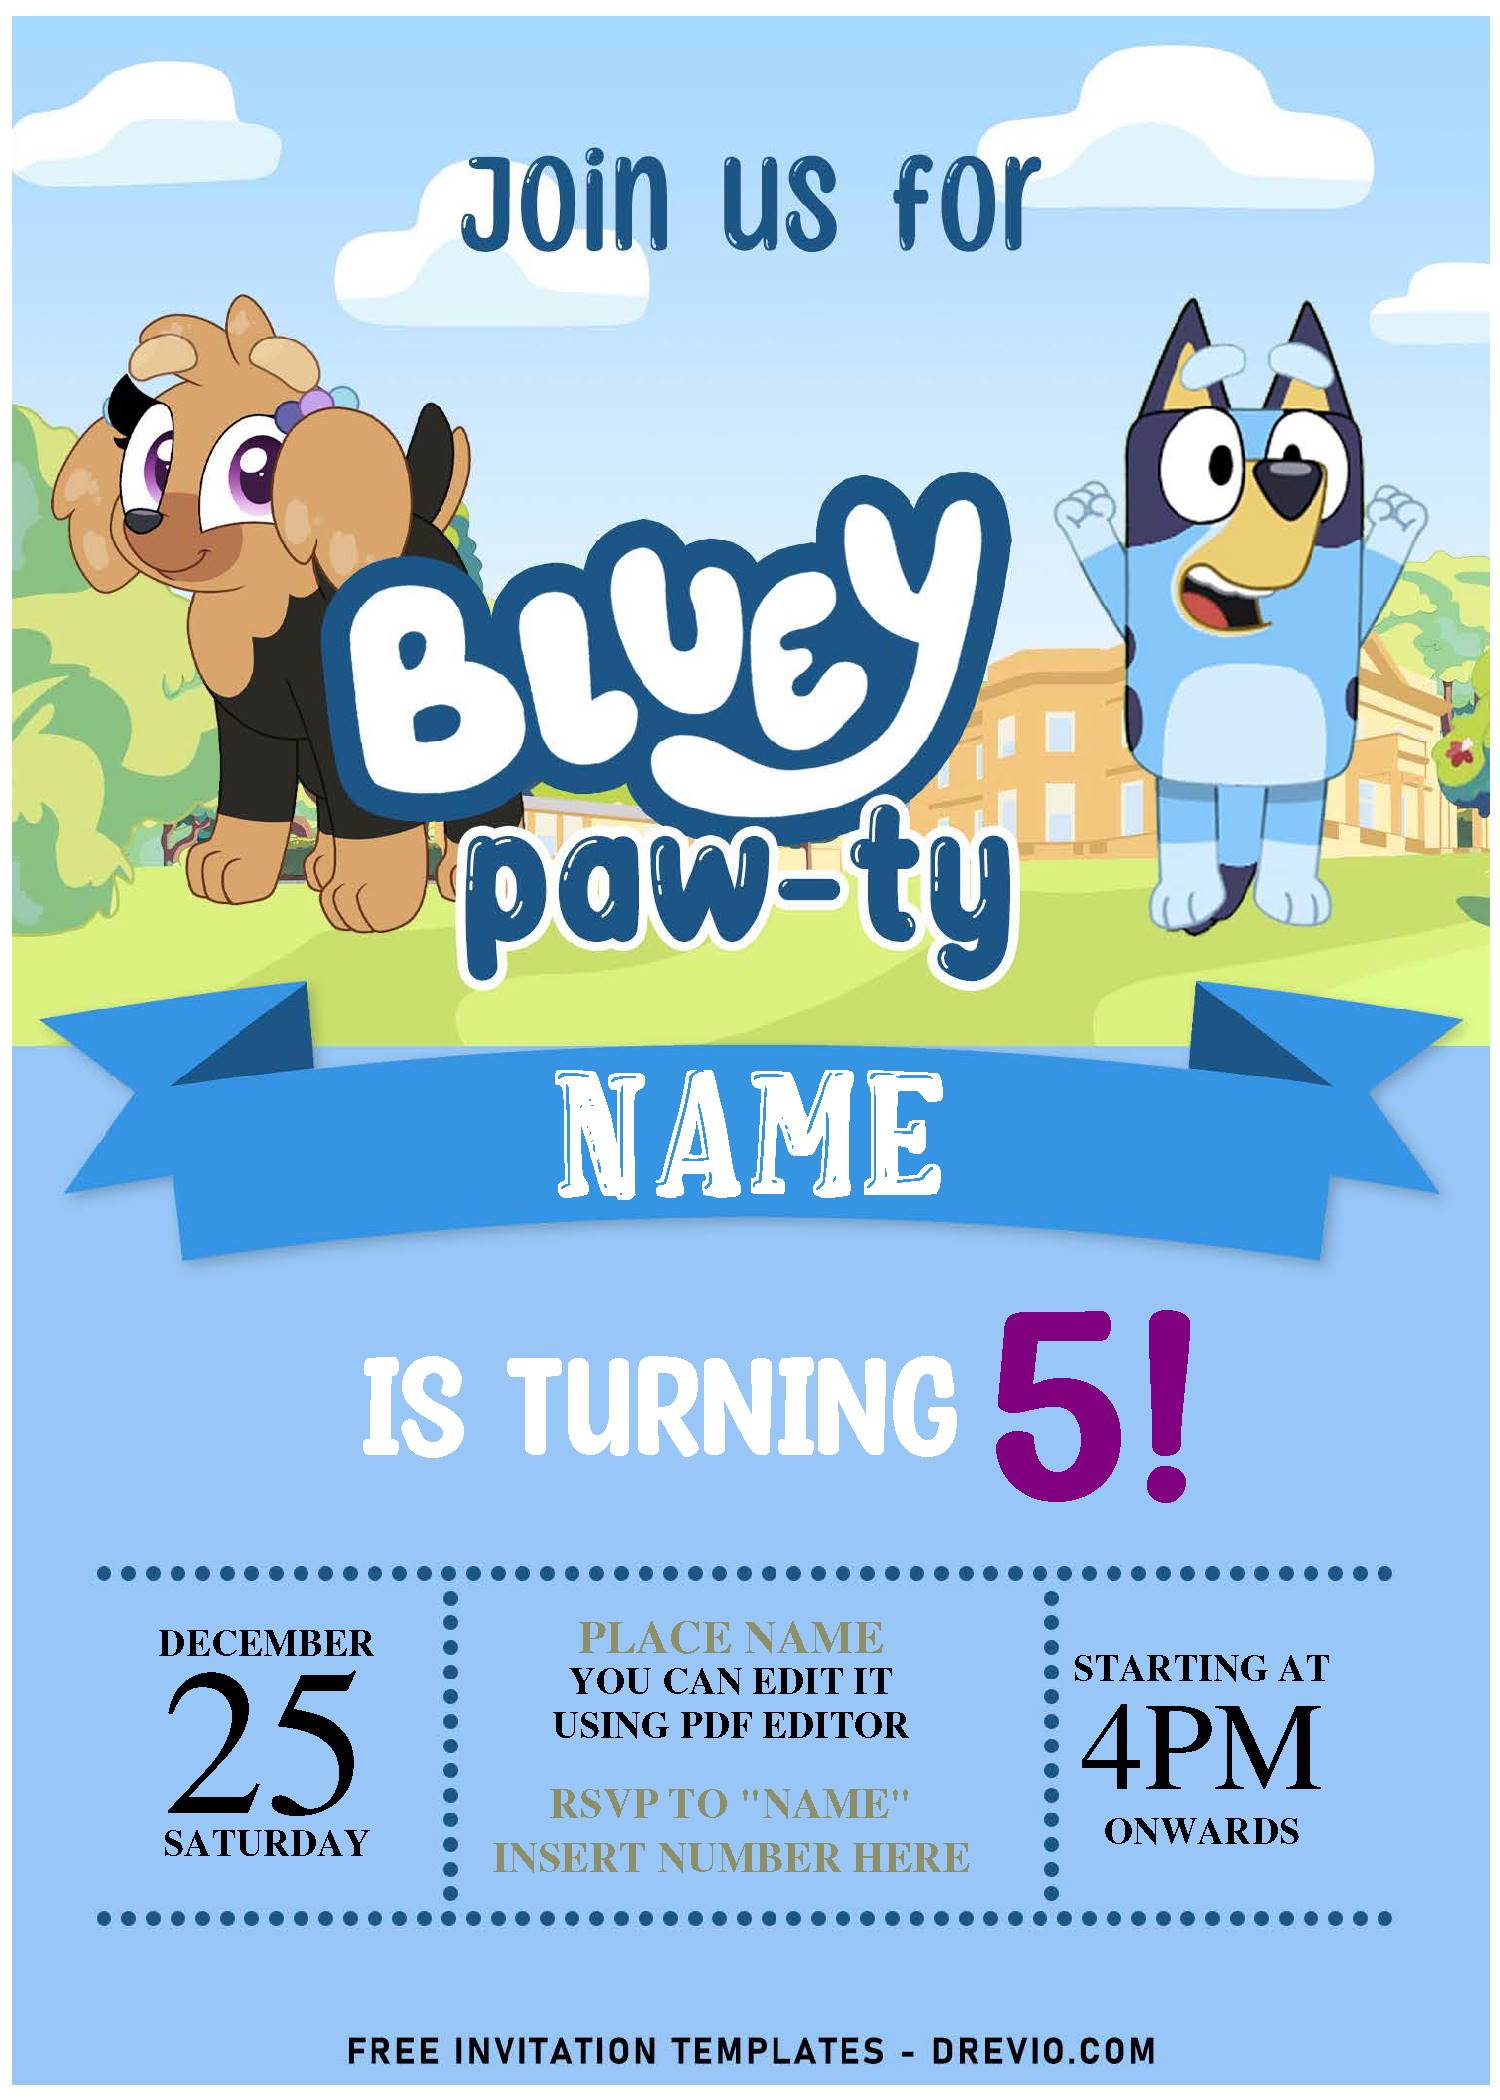 Free Bluey Invitation Templates